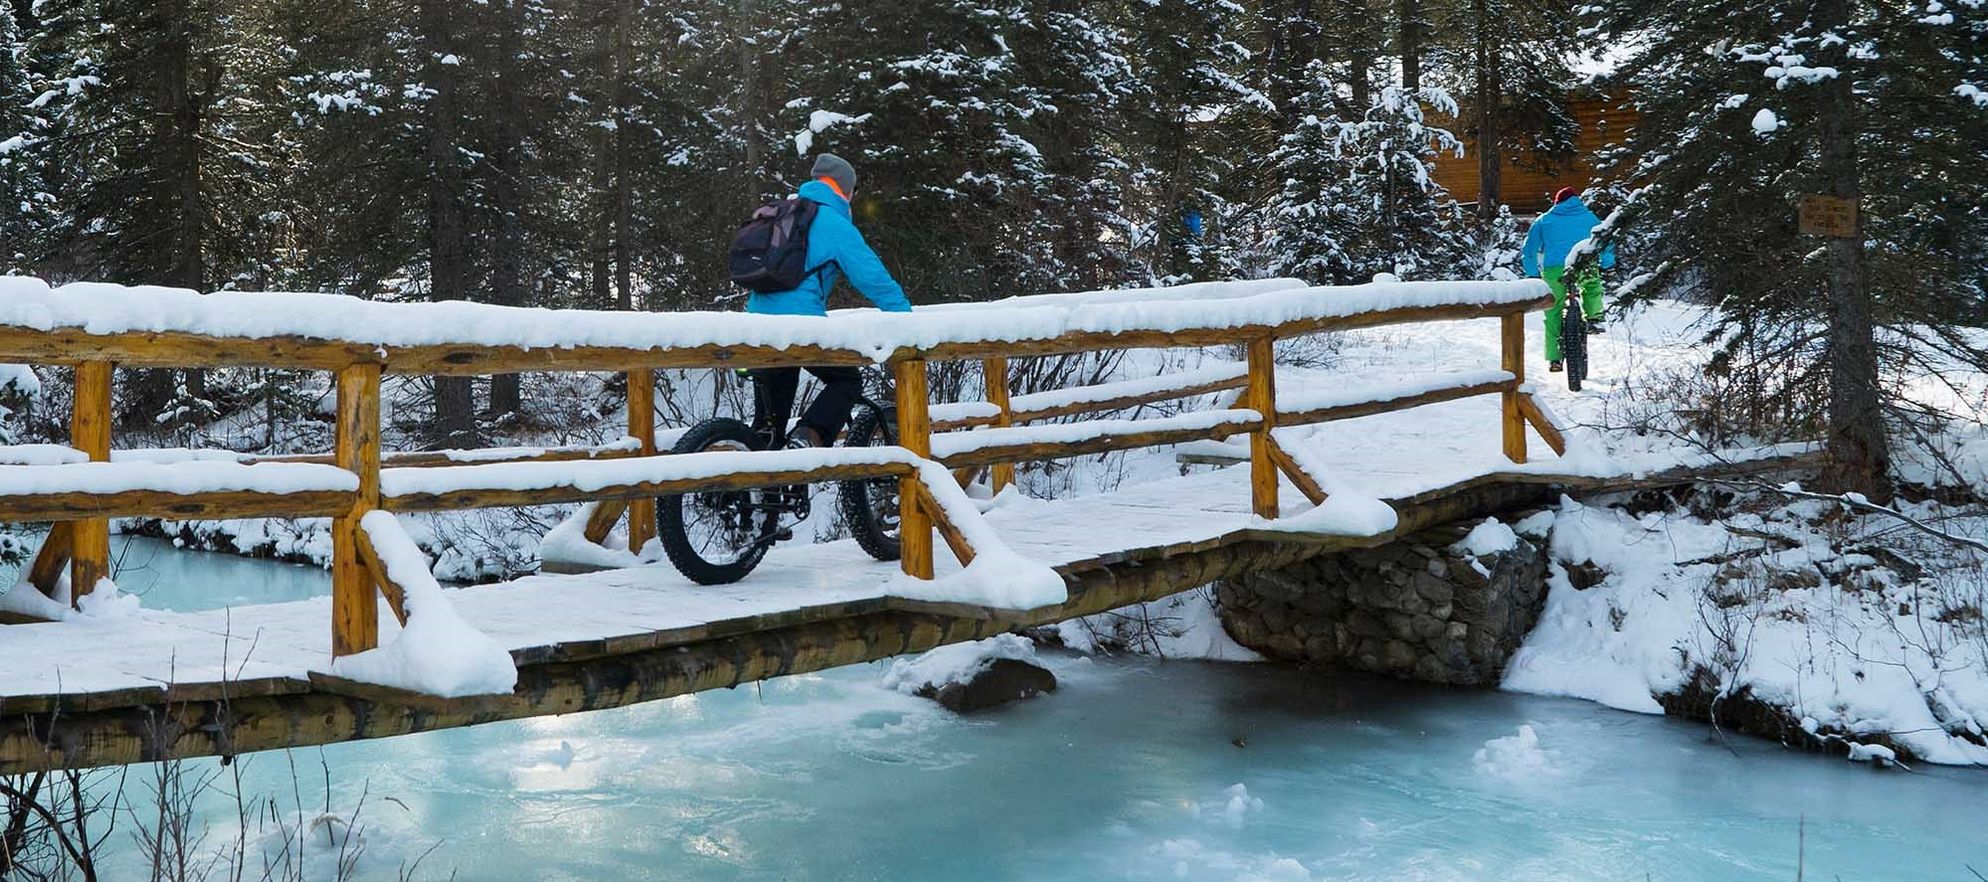 Two friends biking across a snow covered bridge in winter